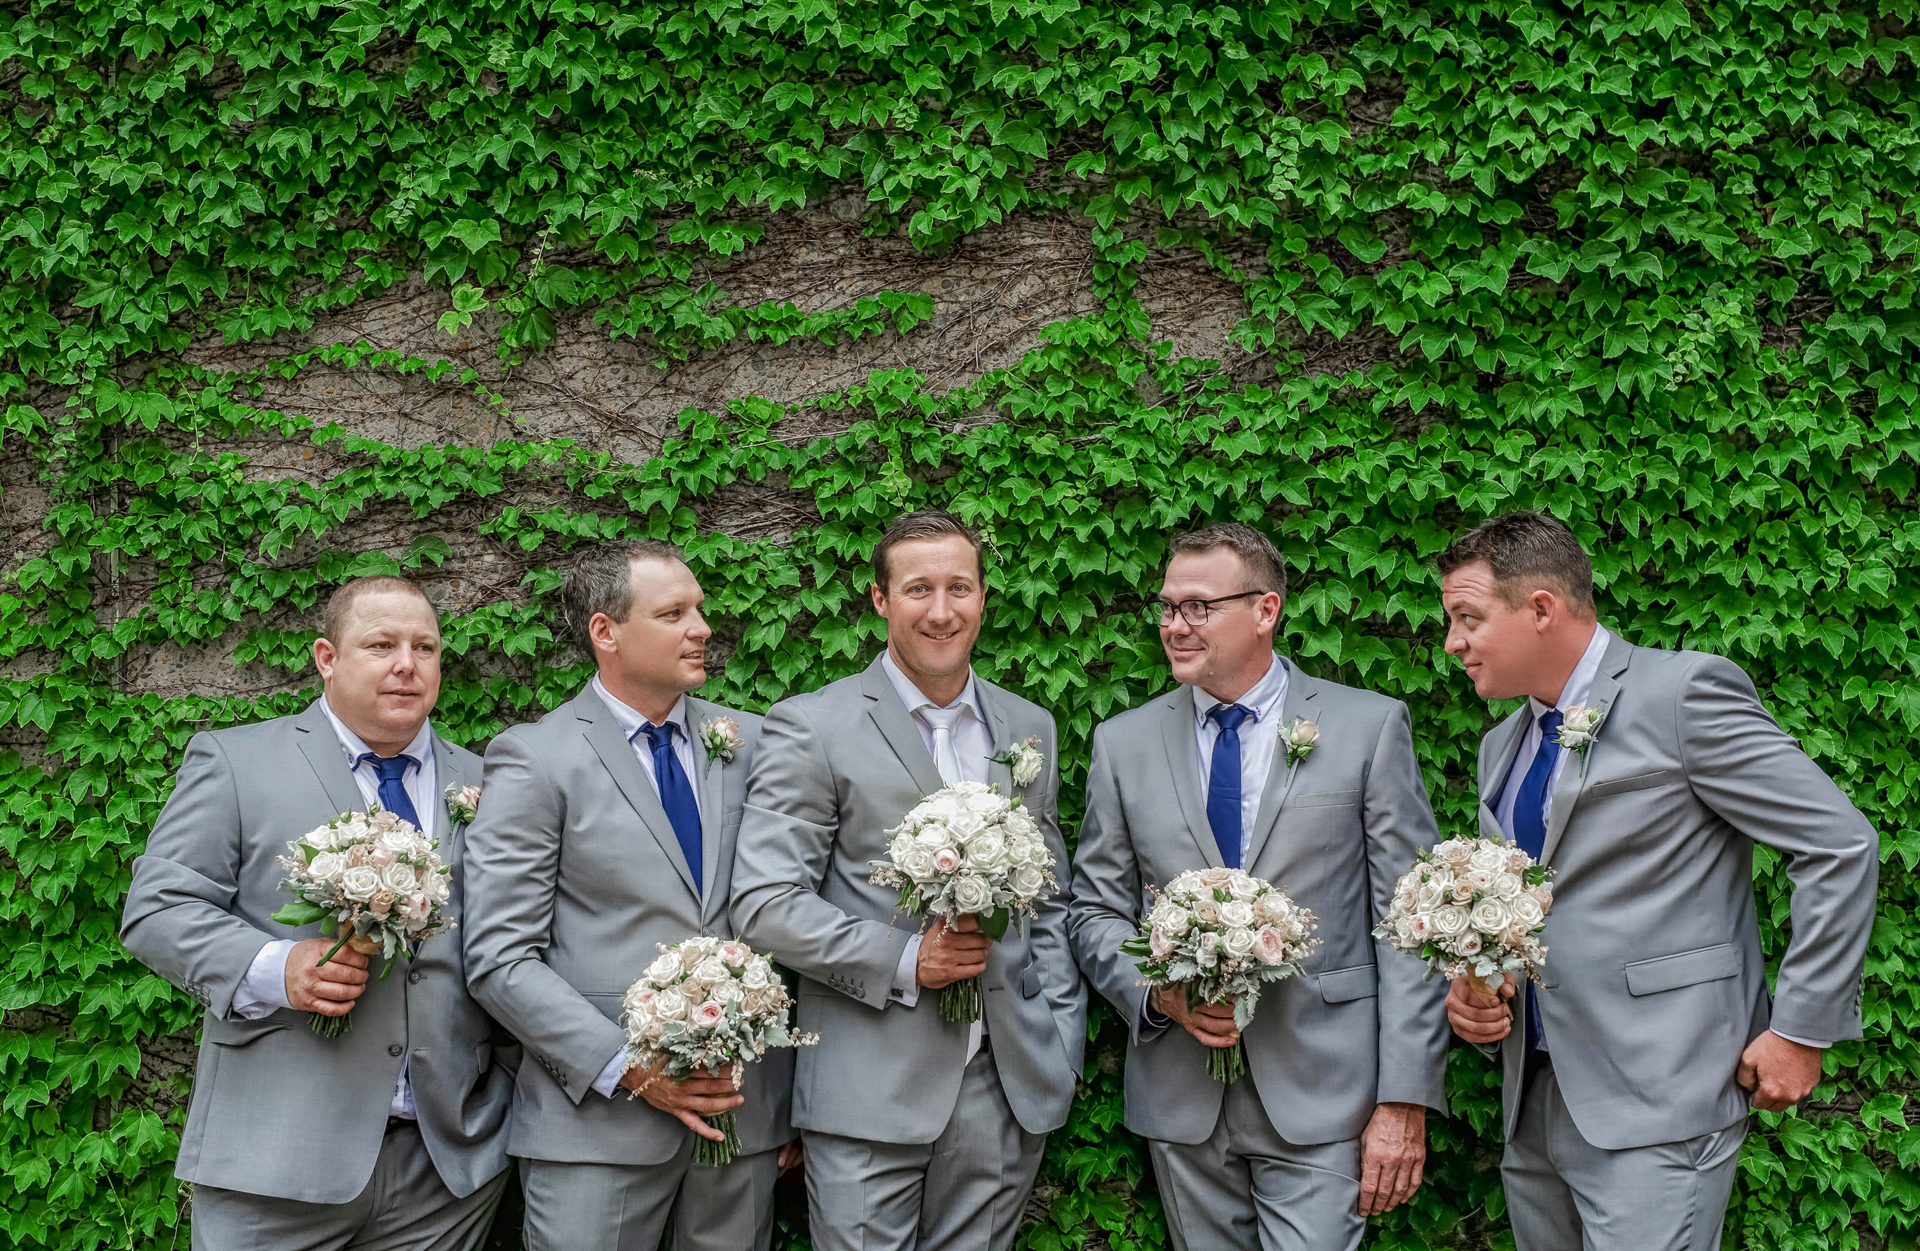 funny photo of the groom & groomsmen holding wedding flowers